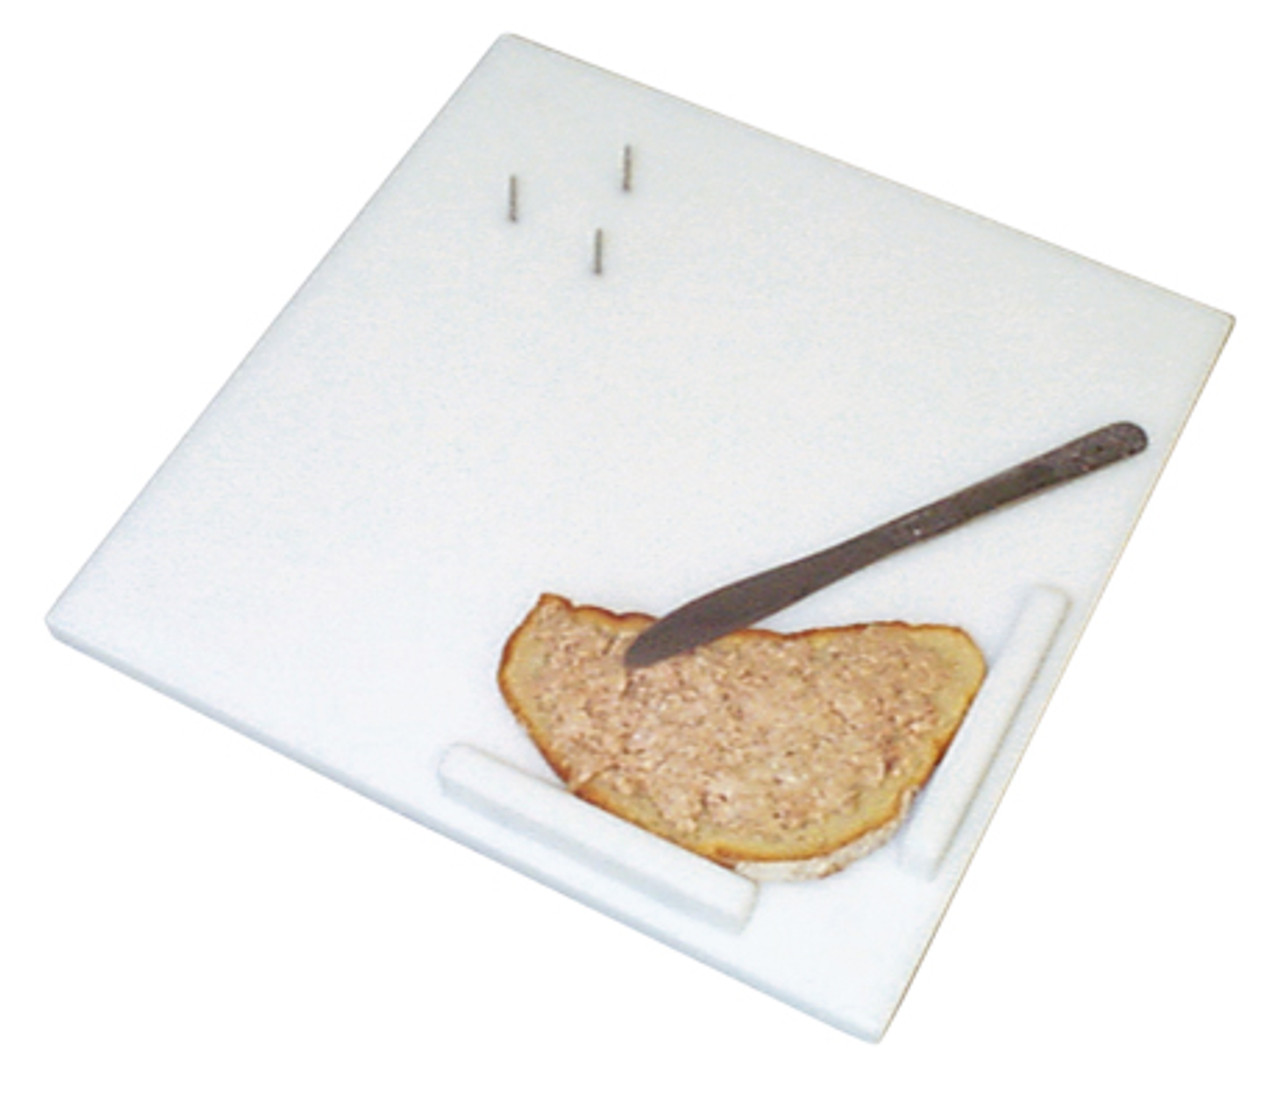 White Food Grade Polypropylene Cutting board, 12x12